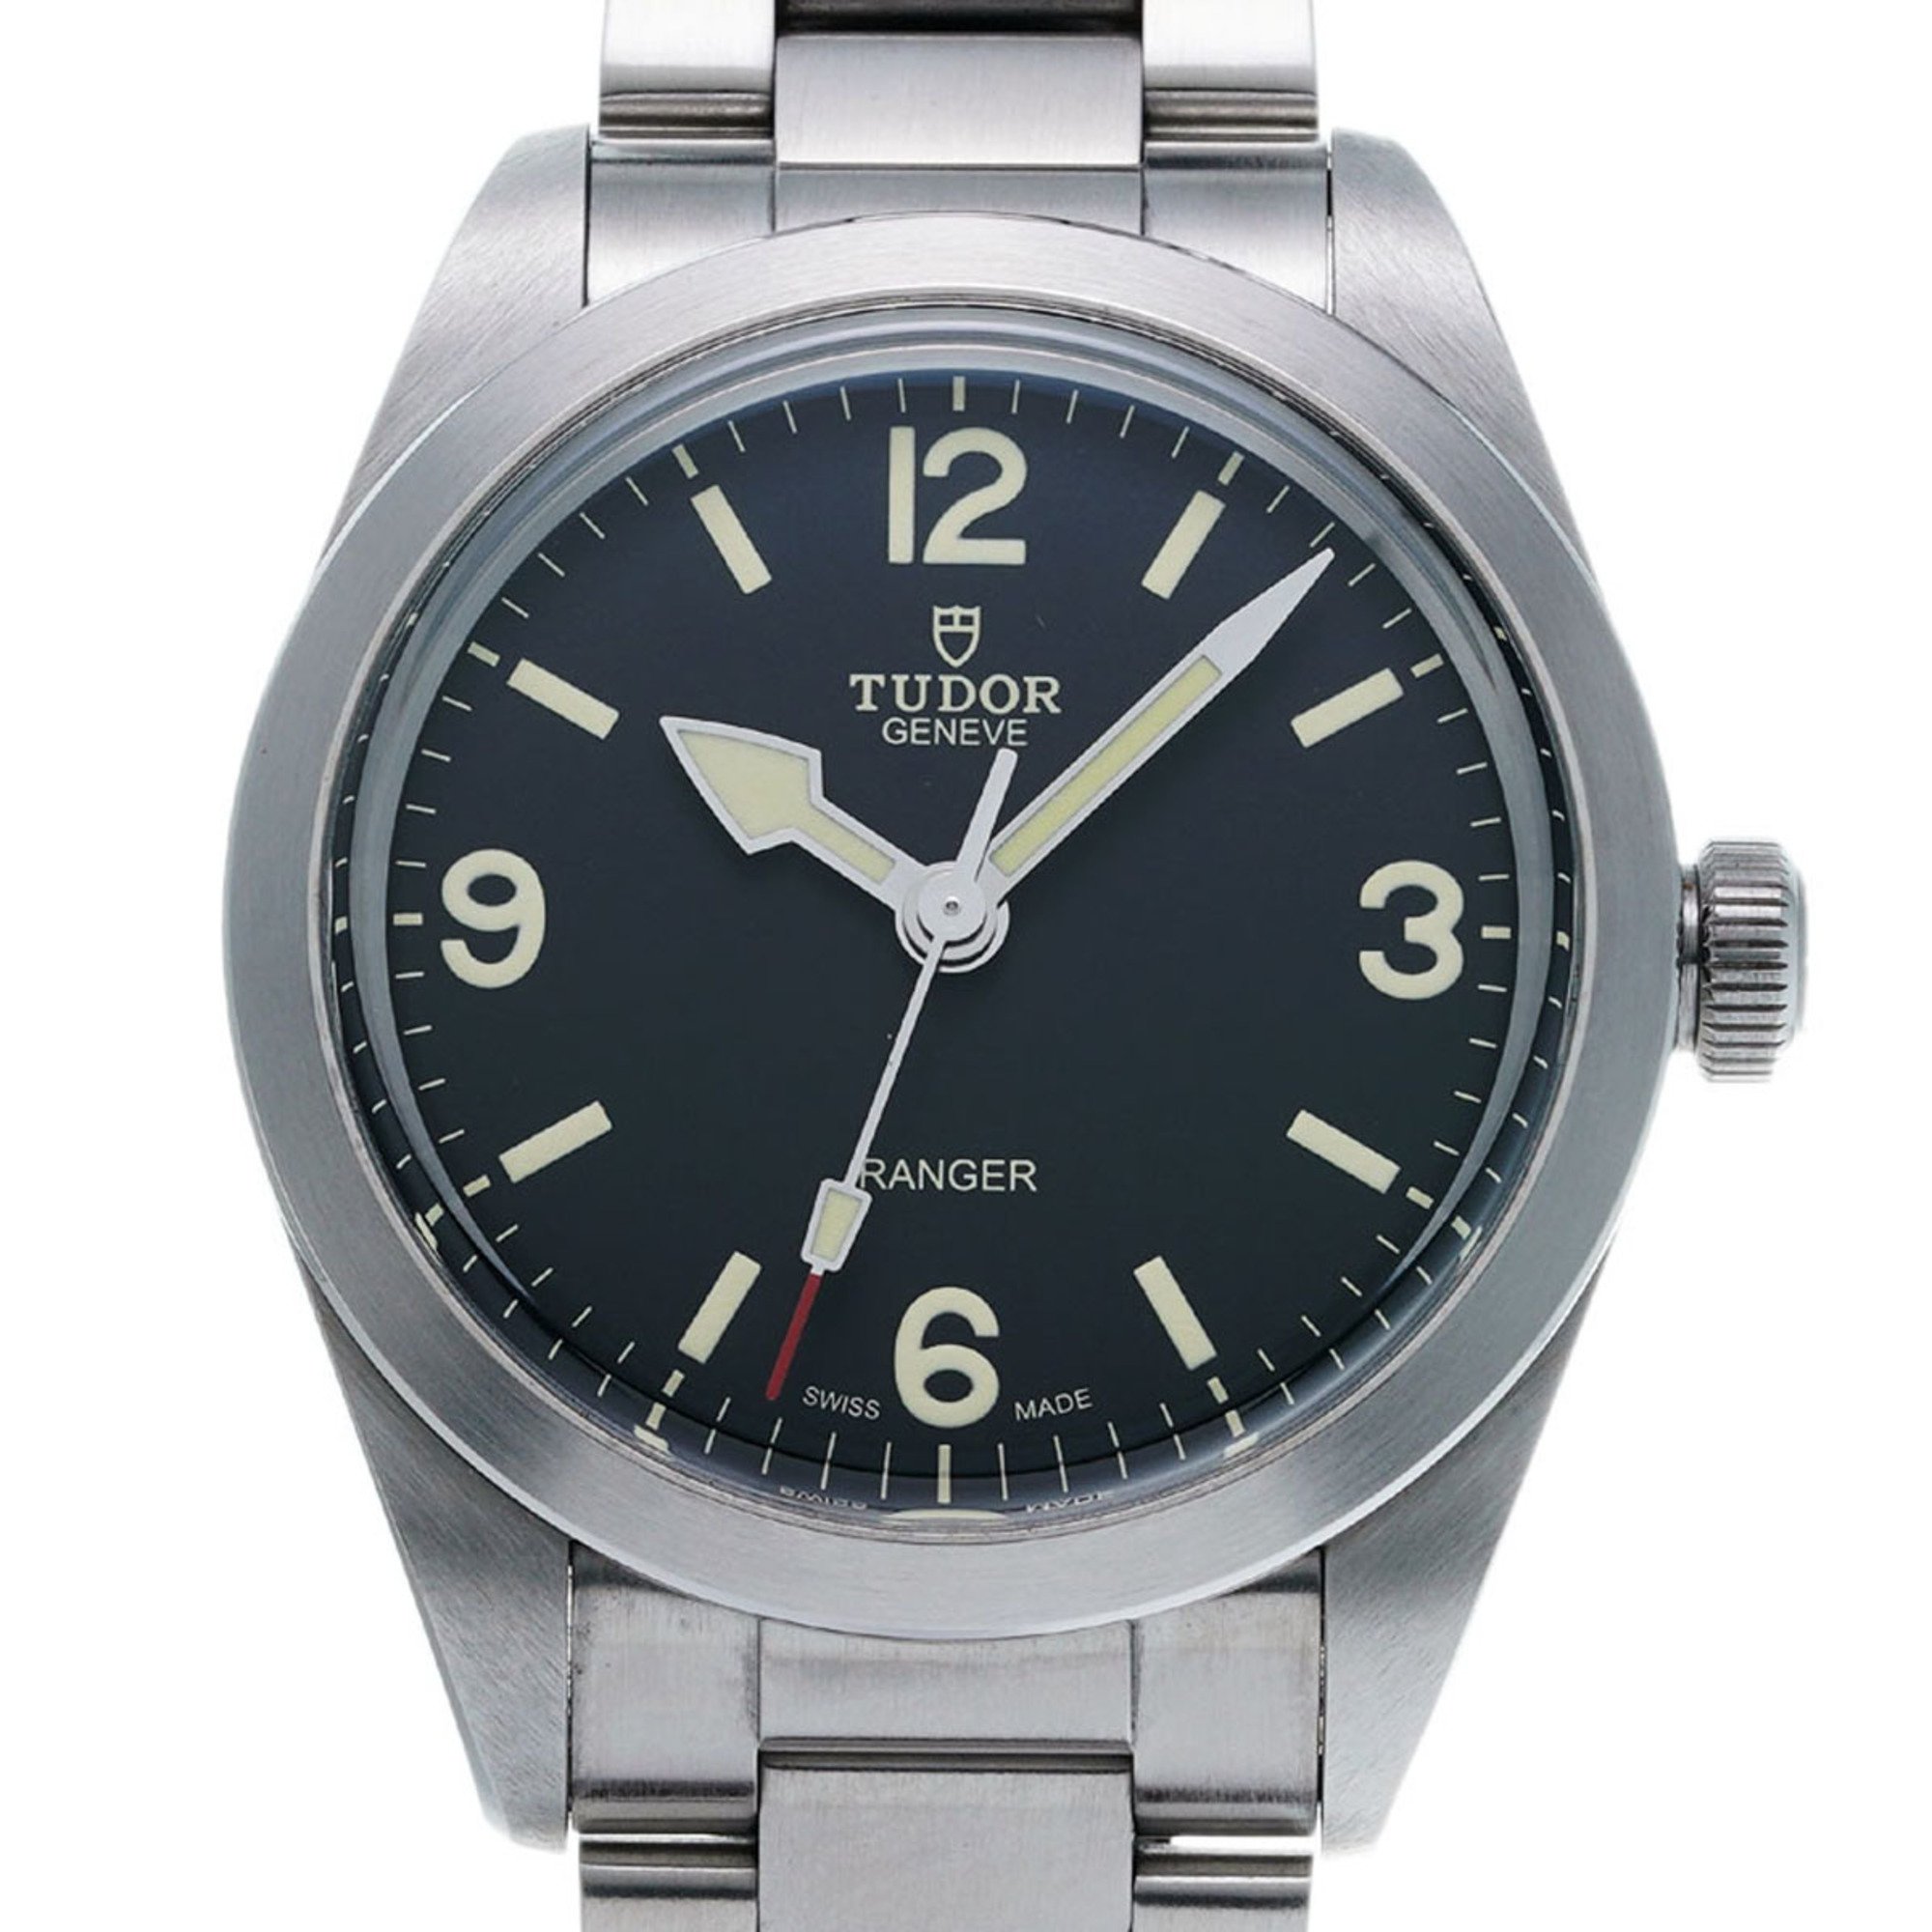 TUDOR Ranger 79950 Men's SS Watch Automatic Black Dial